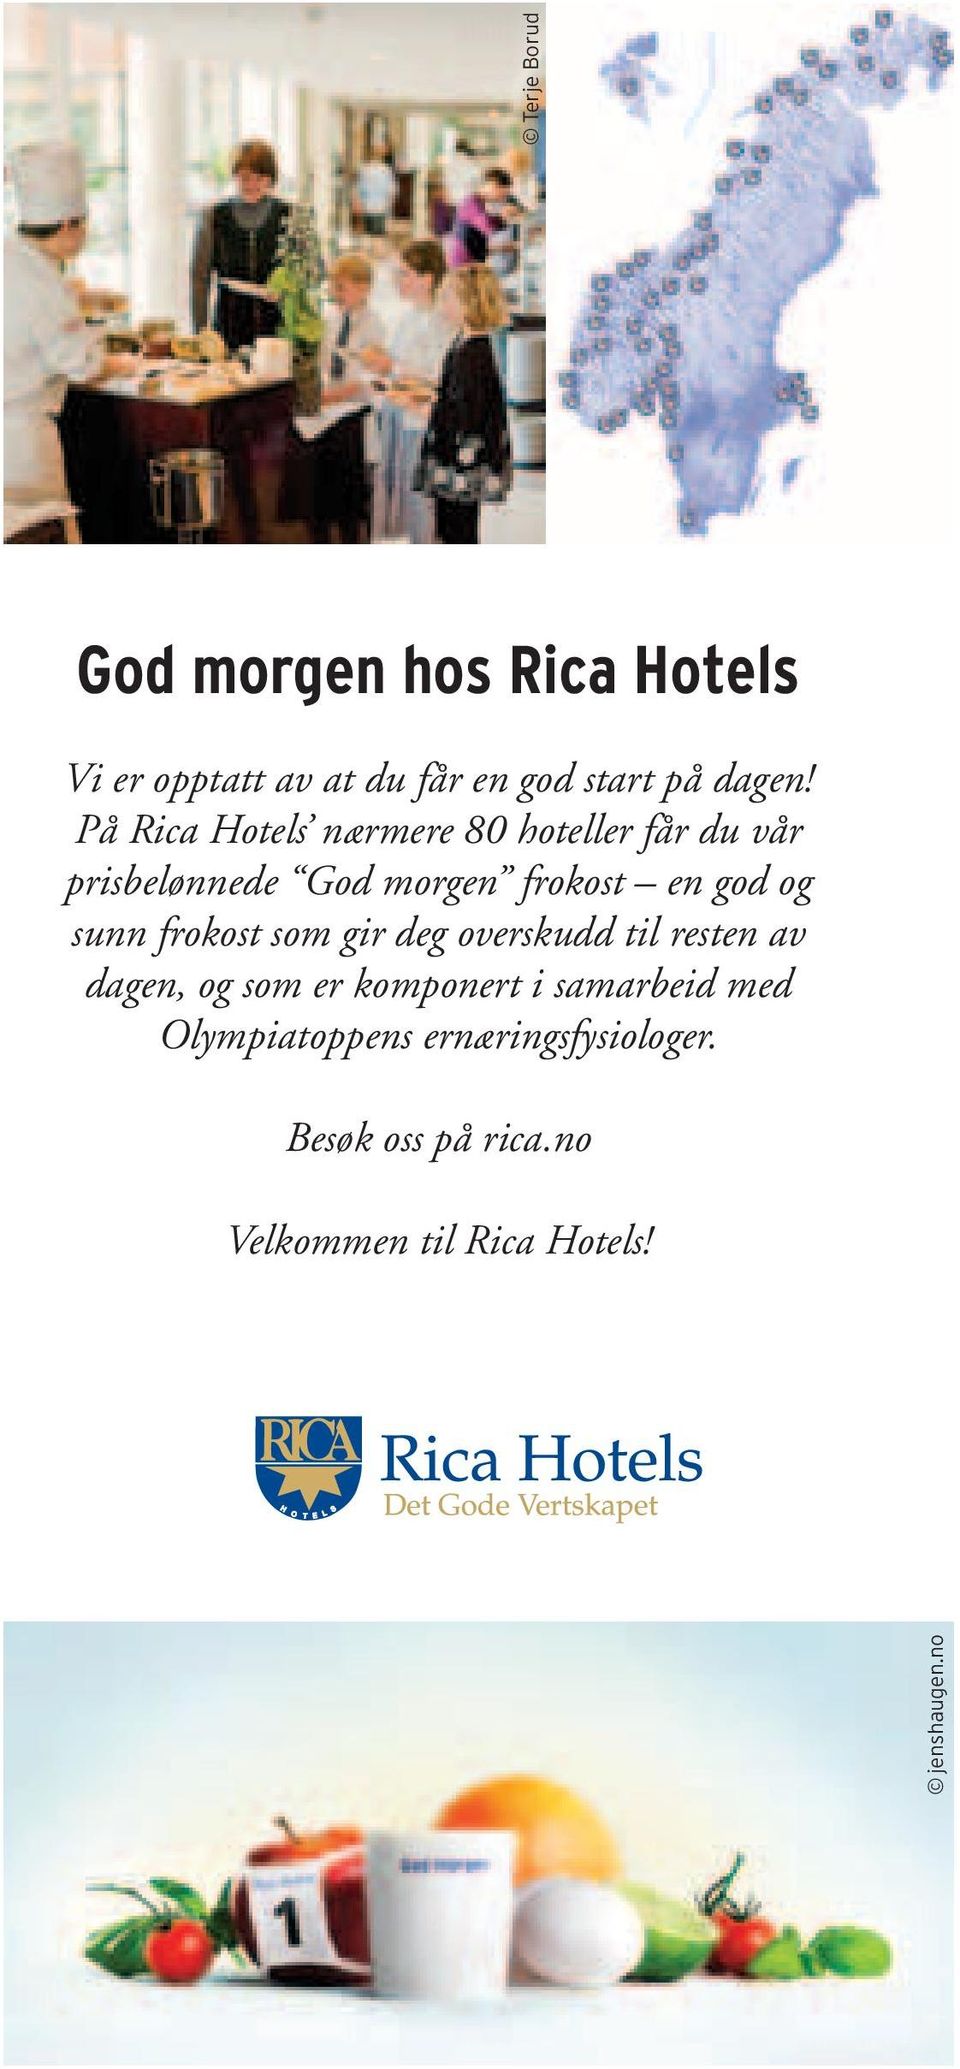 På Rica Hotels nærmere 80 hoteller får du vår prisbelønnede God morgen frokost en god og